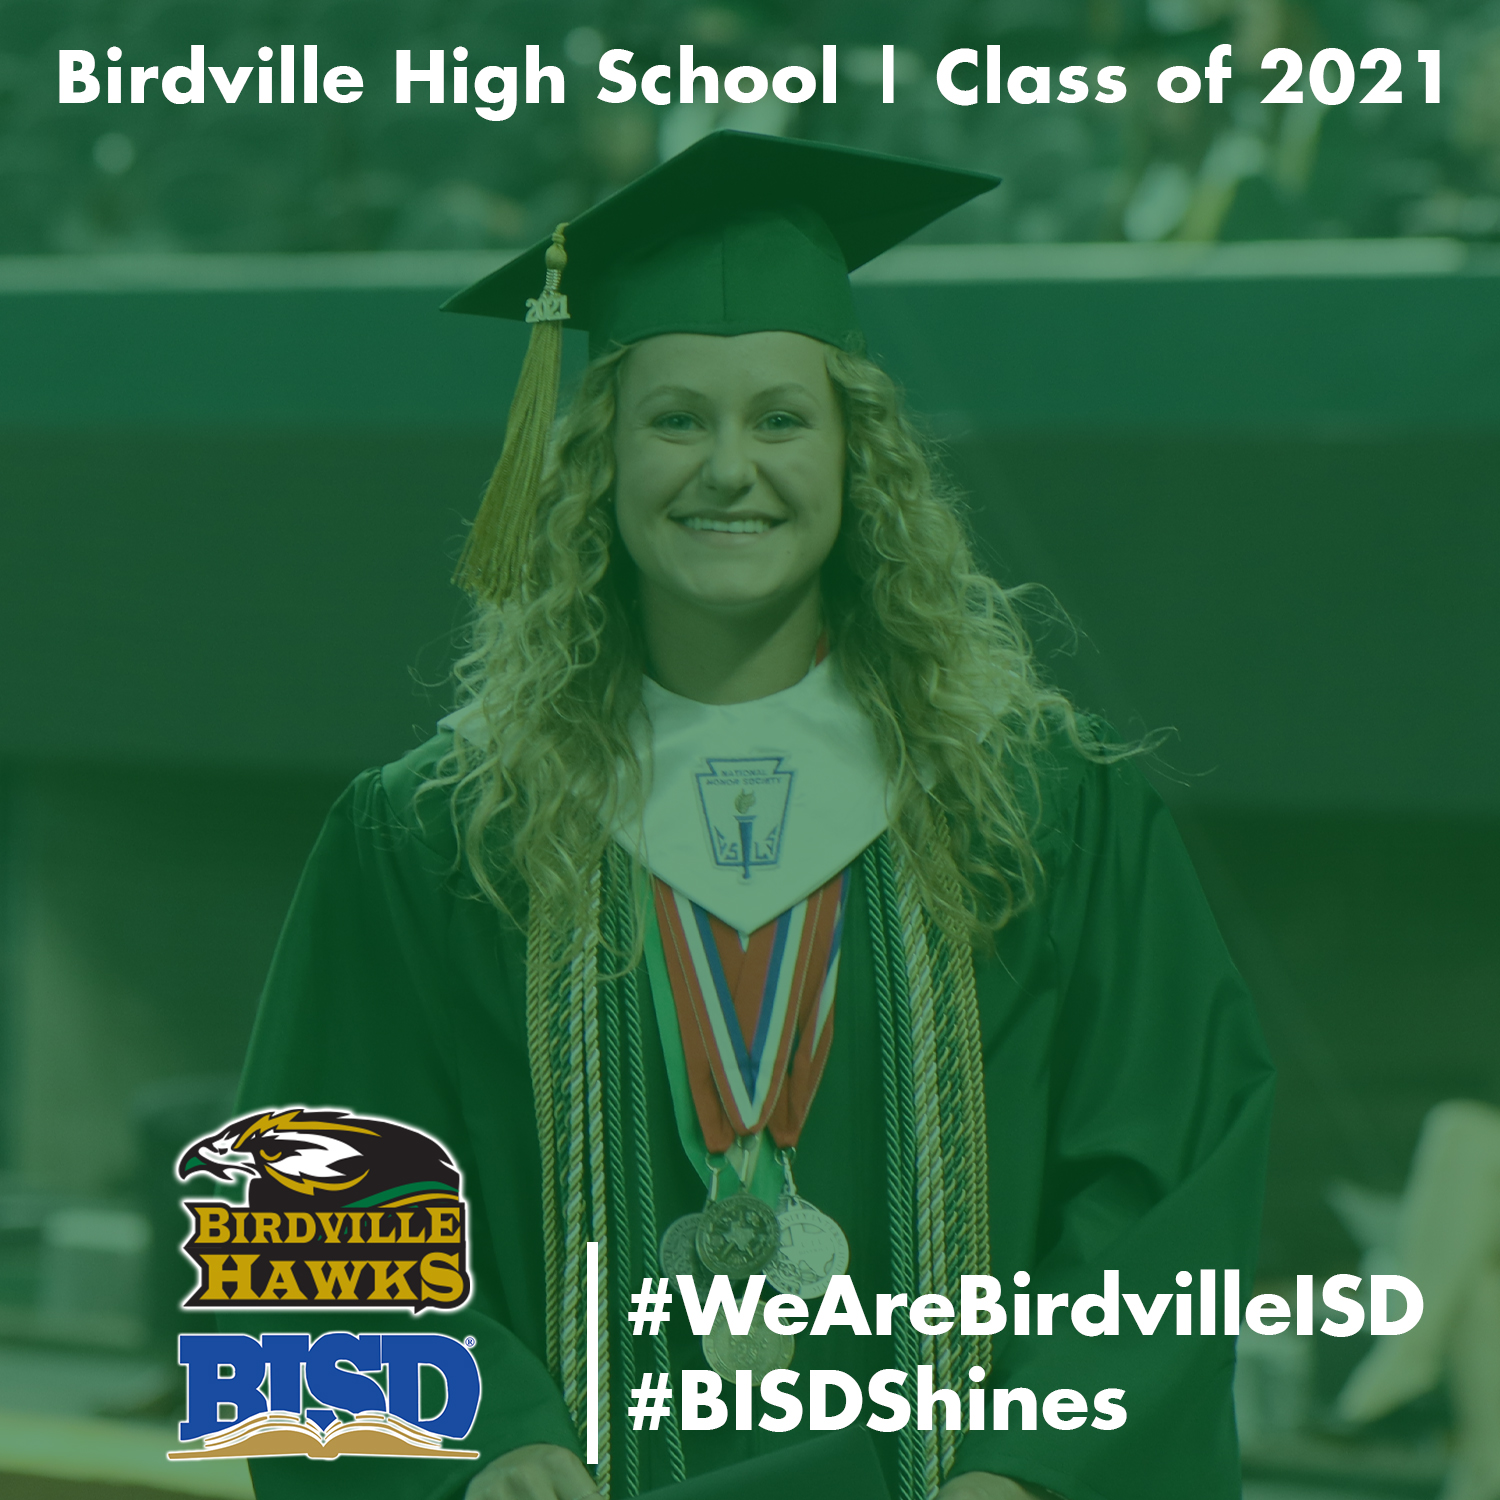 Congratulations to the Birdville High School Class of 2021! #BISDShines #WeAreBirdvilleISD 